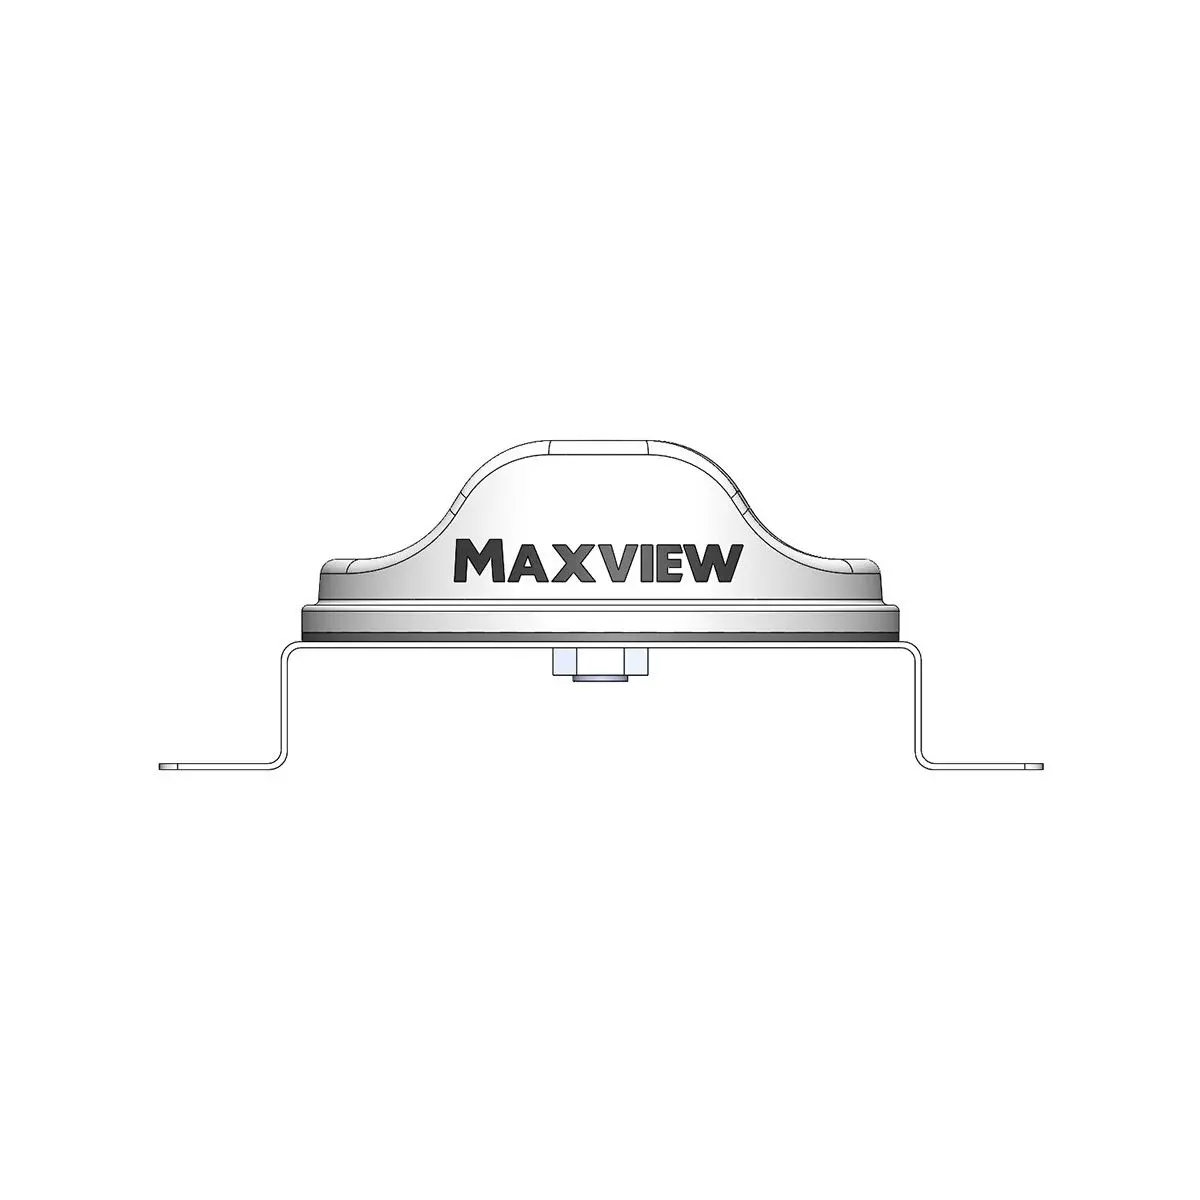 Suport de acoperiș MXL050/KIT1 pentru Maxview Roam, alb